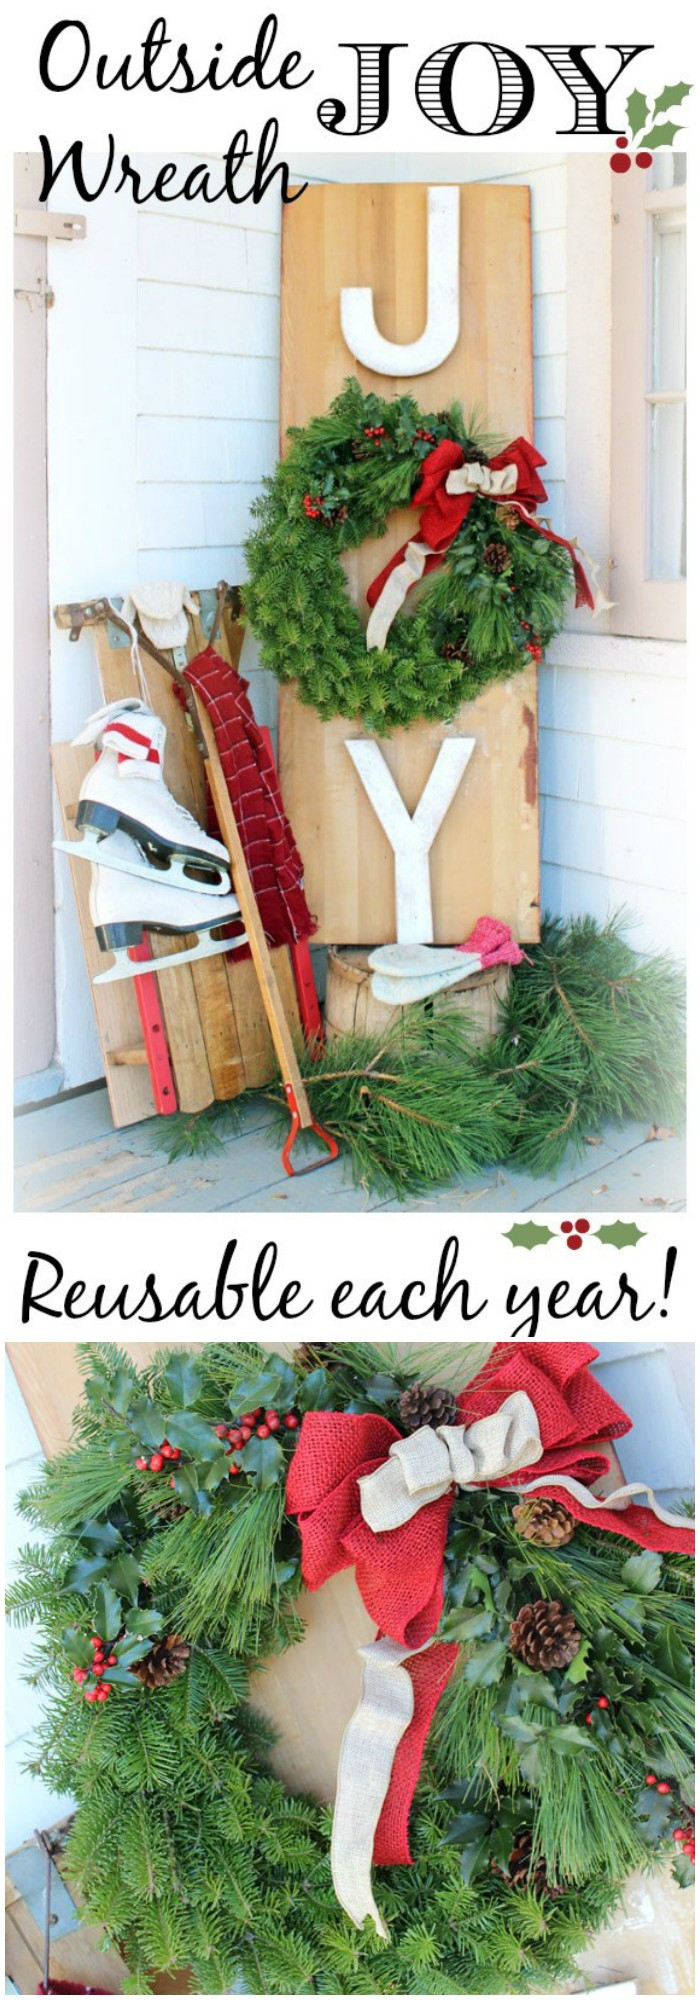 Best ideas about DIY Outdoor Christmas Decor
. Save or Pin 21 Cheap DIY Outdoor Christmas Decorations • DIY Home Decor Now.